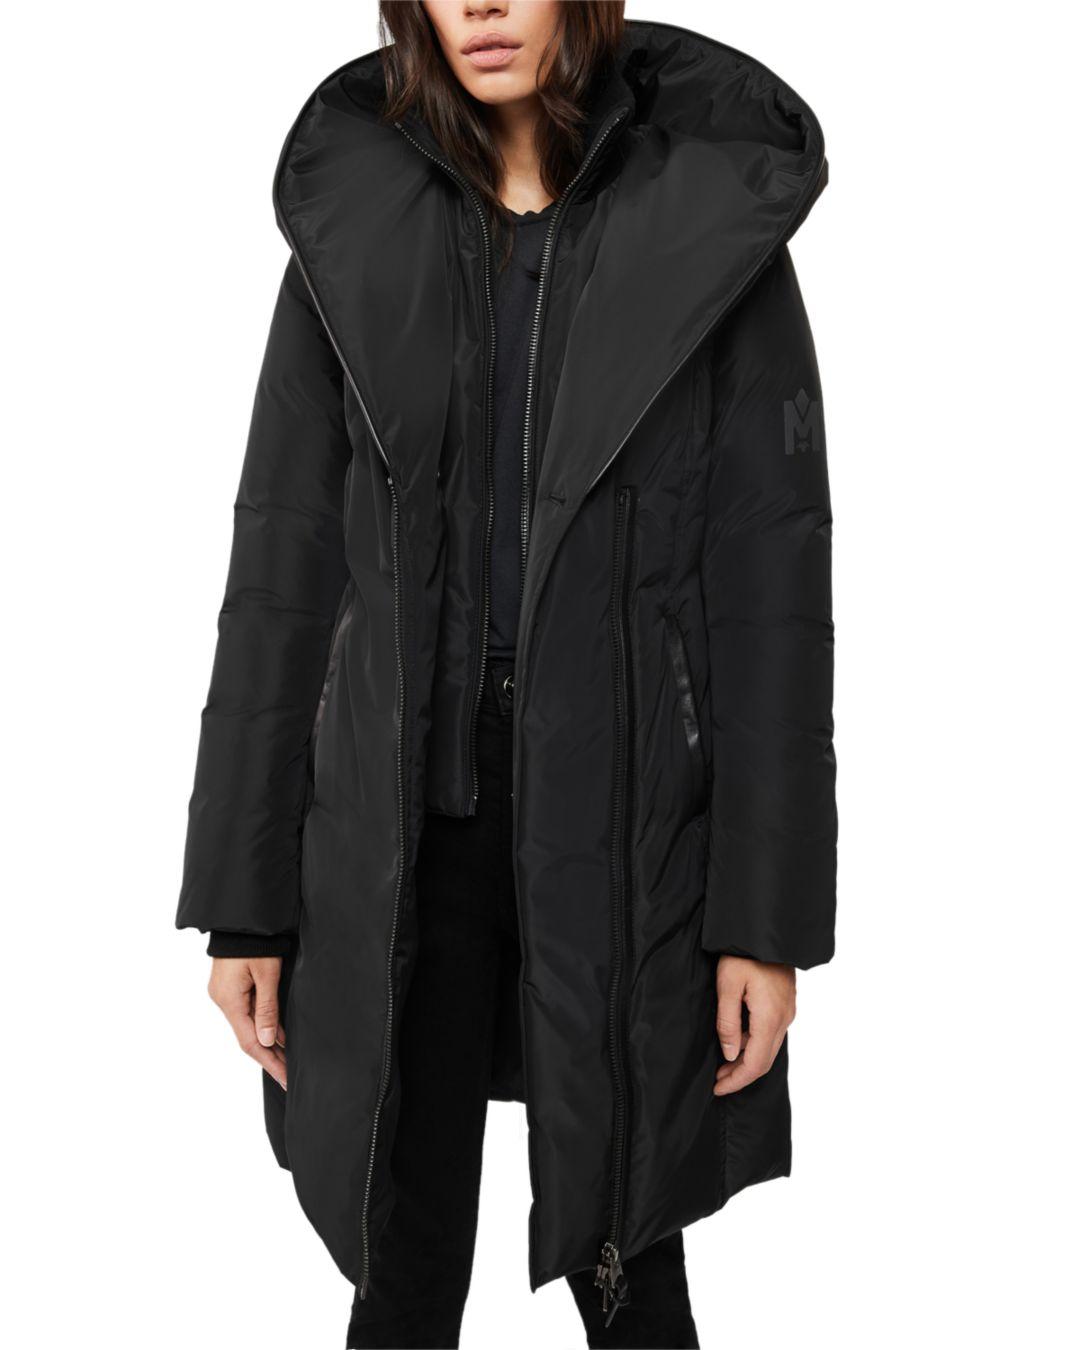 Mackage Leather Kay Asymmetric Hooded Coat in Black - Lyst